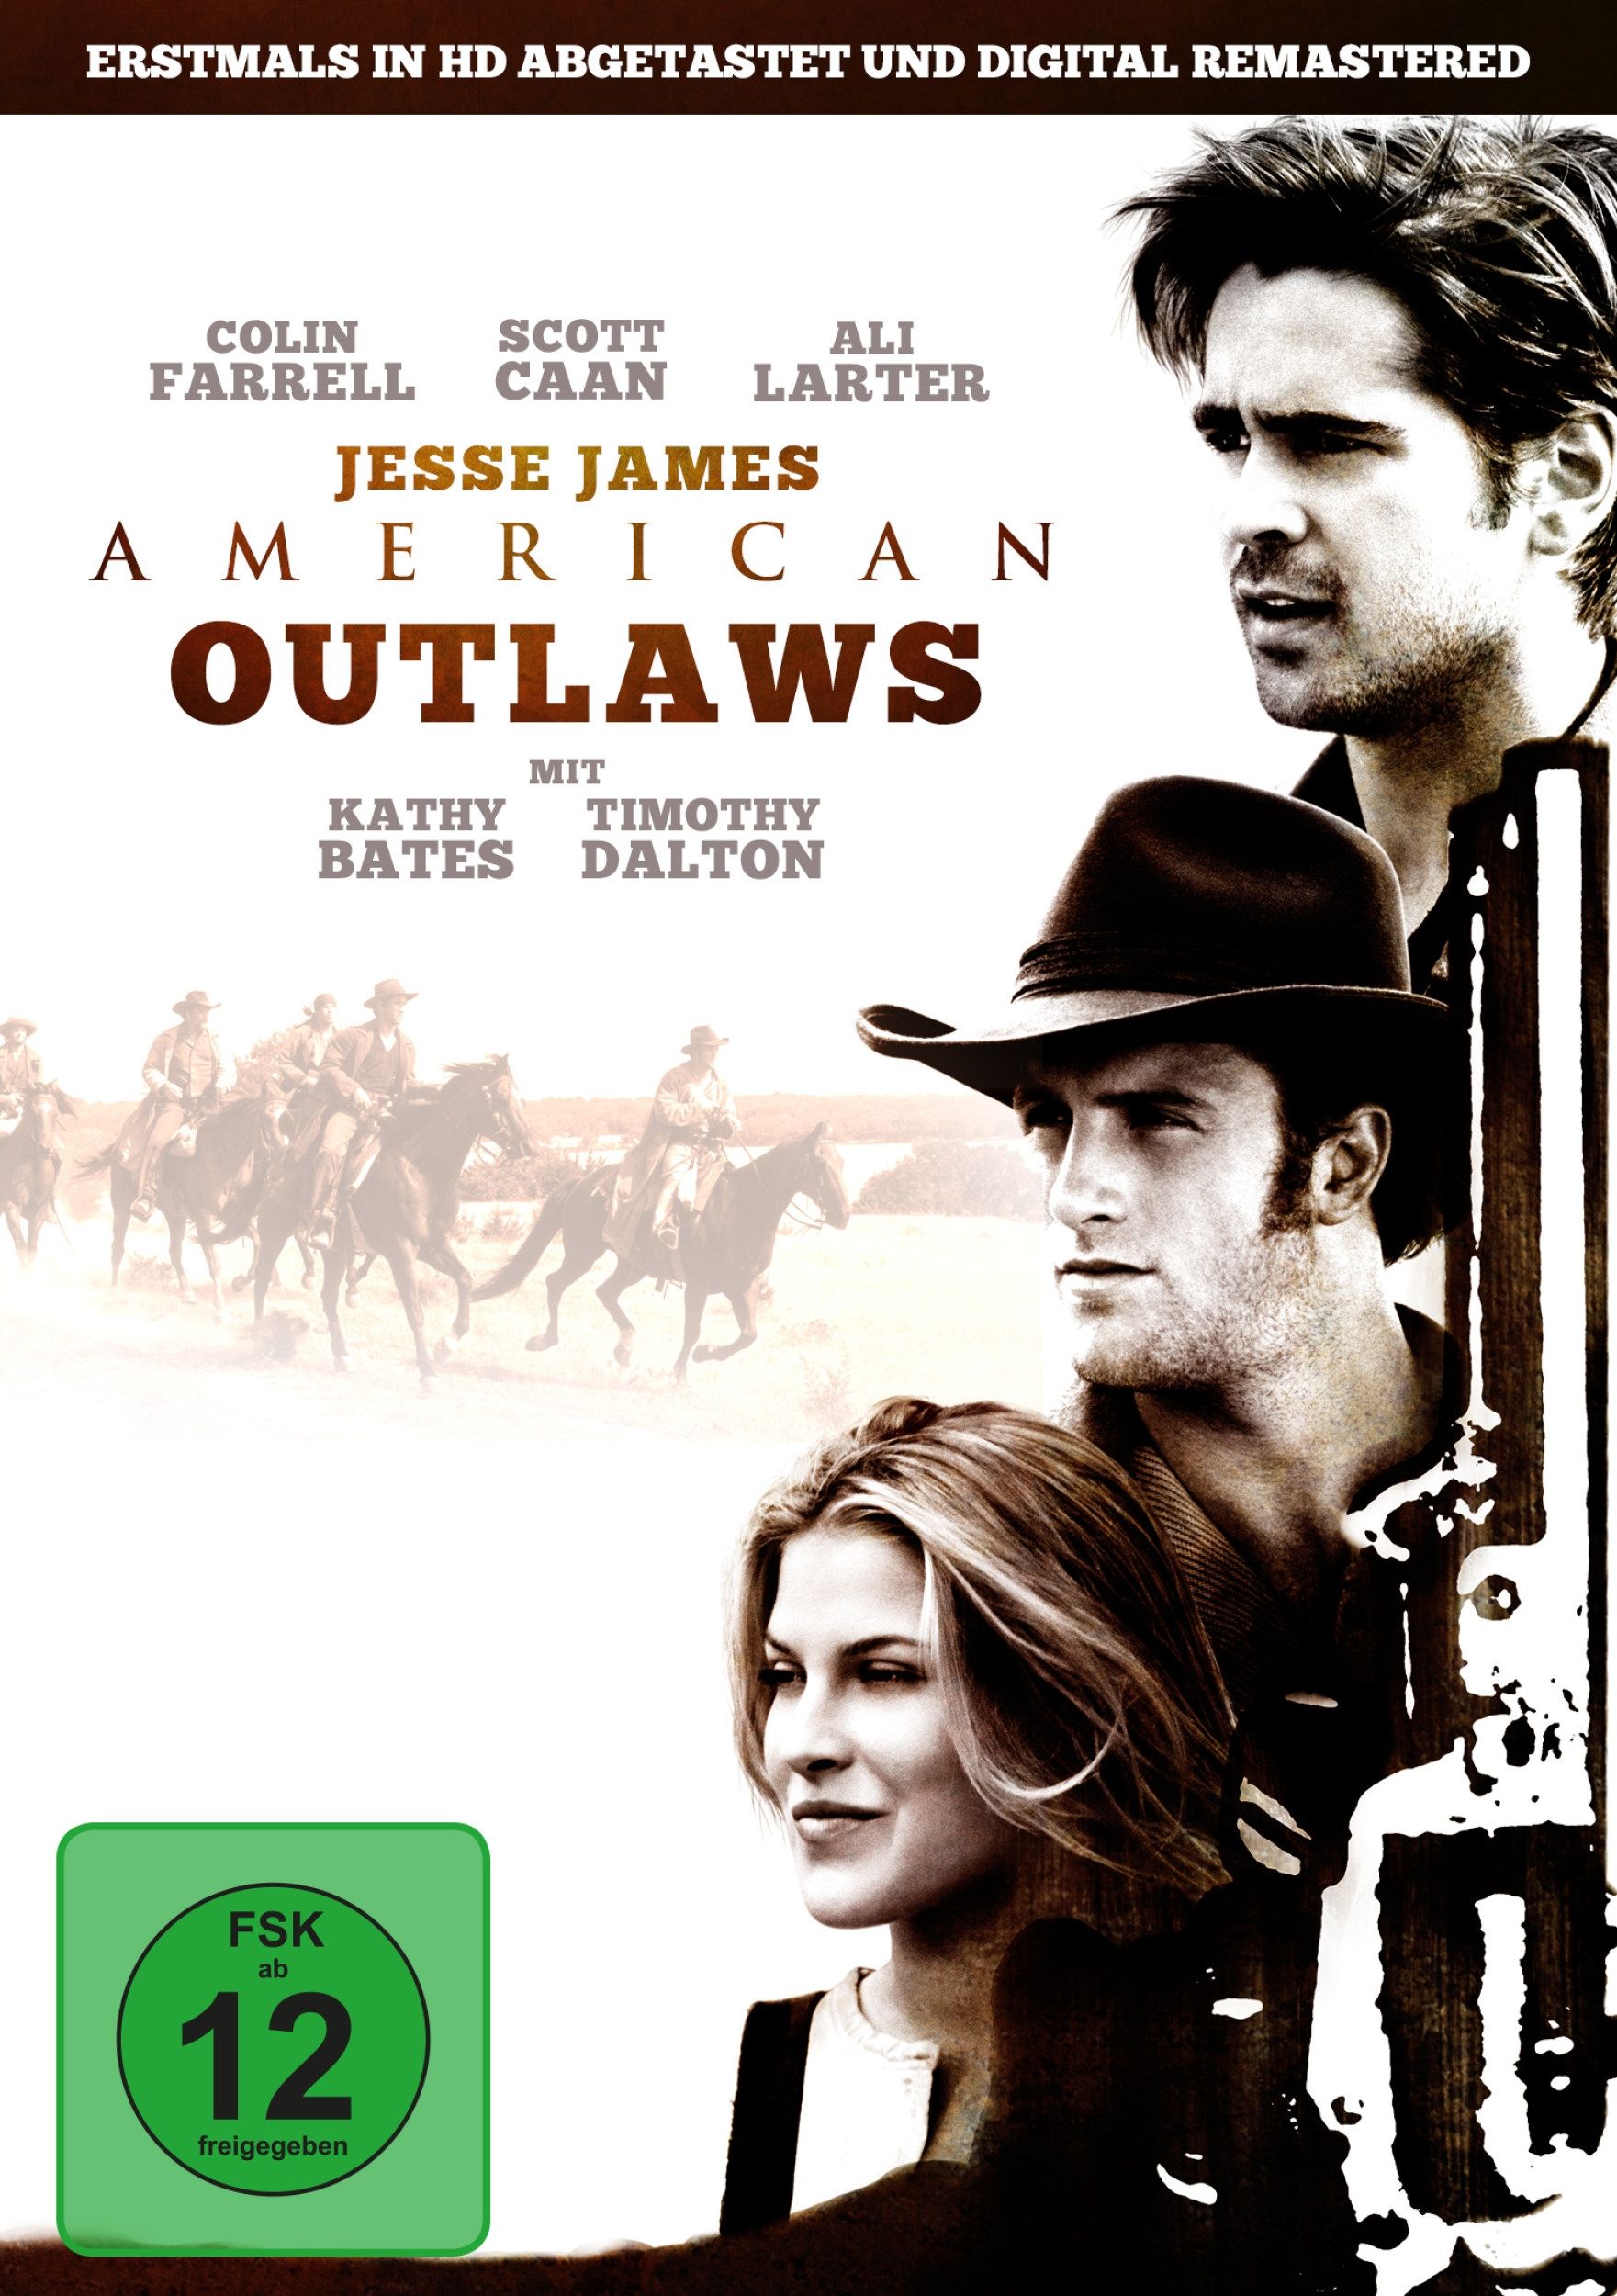 American Outlaws - Jesse James (Uncut)